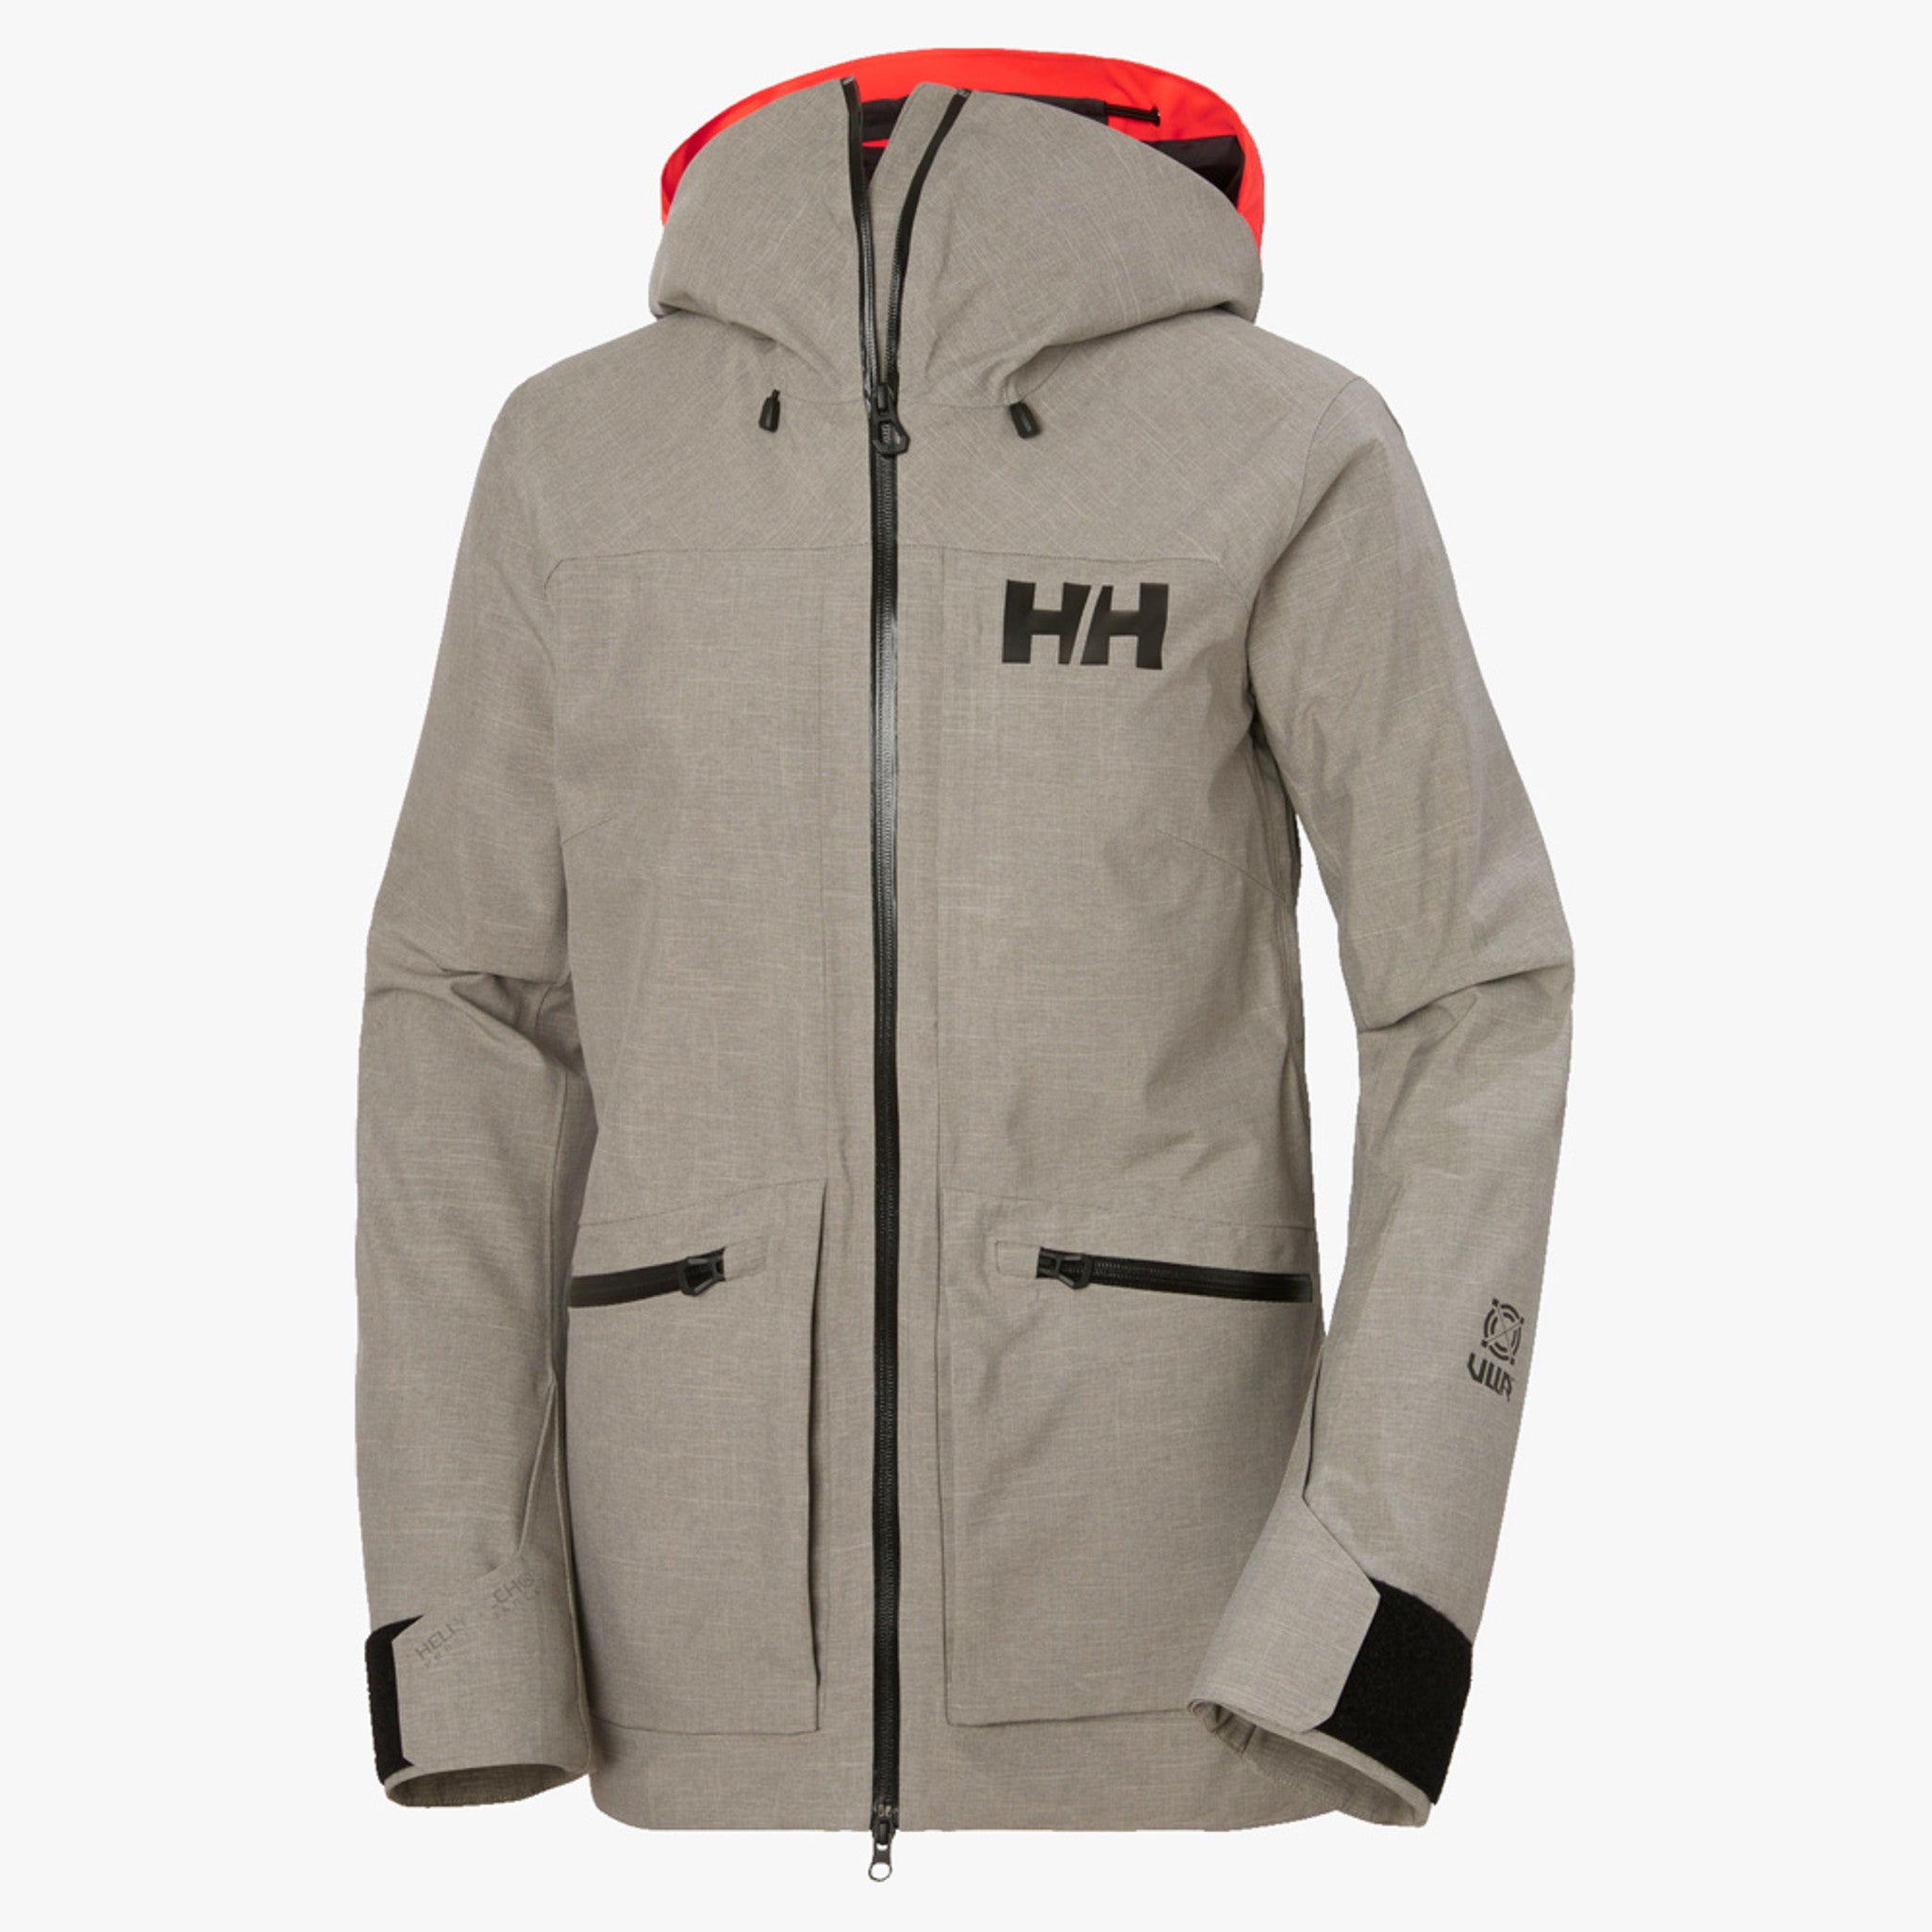 Helly Hansen Powderqueen 3.0 Women's Jacket